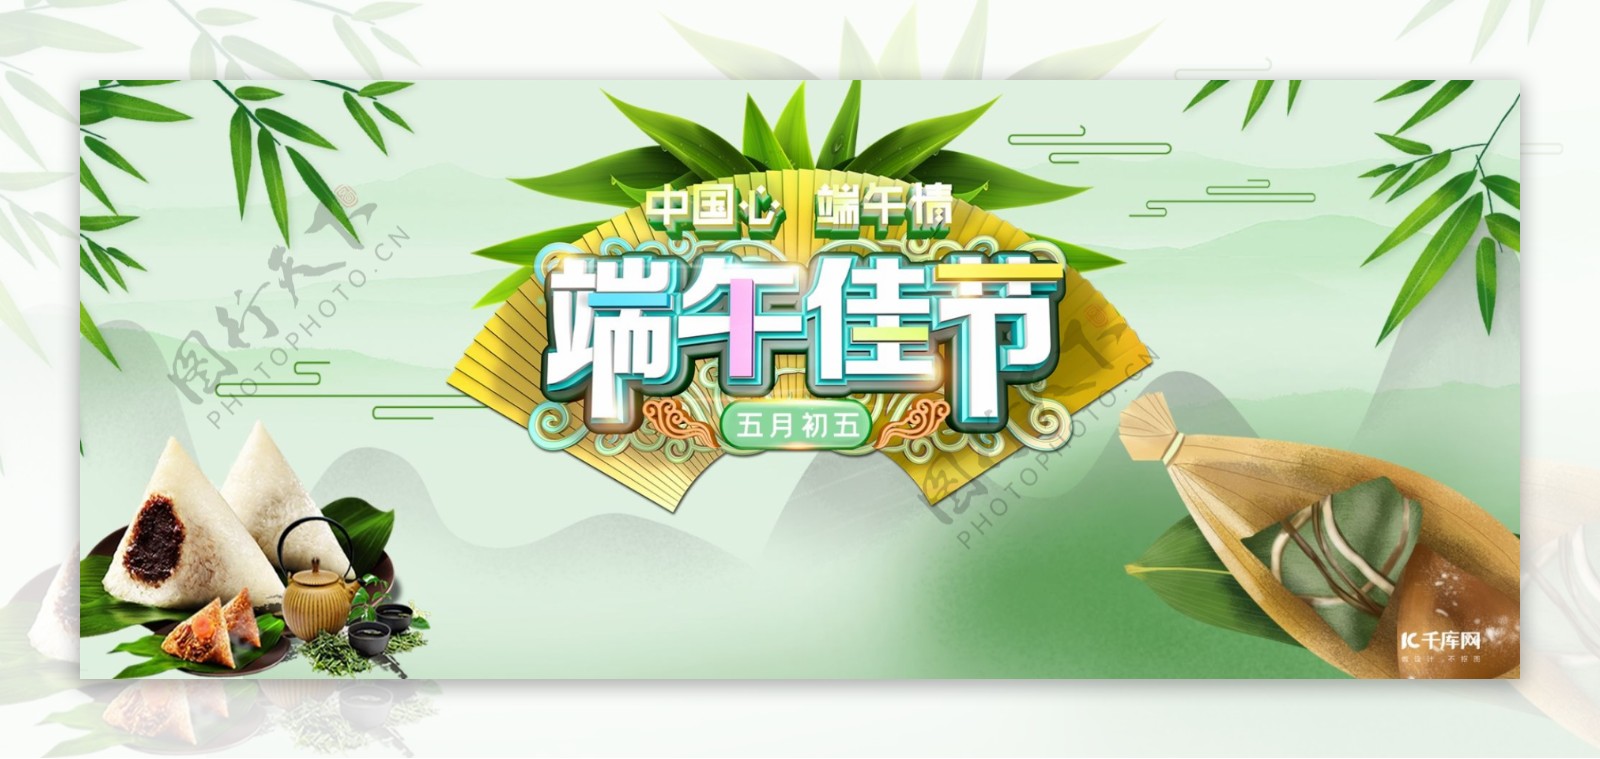 端午节节日电商活动banner